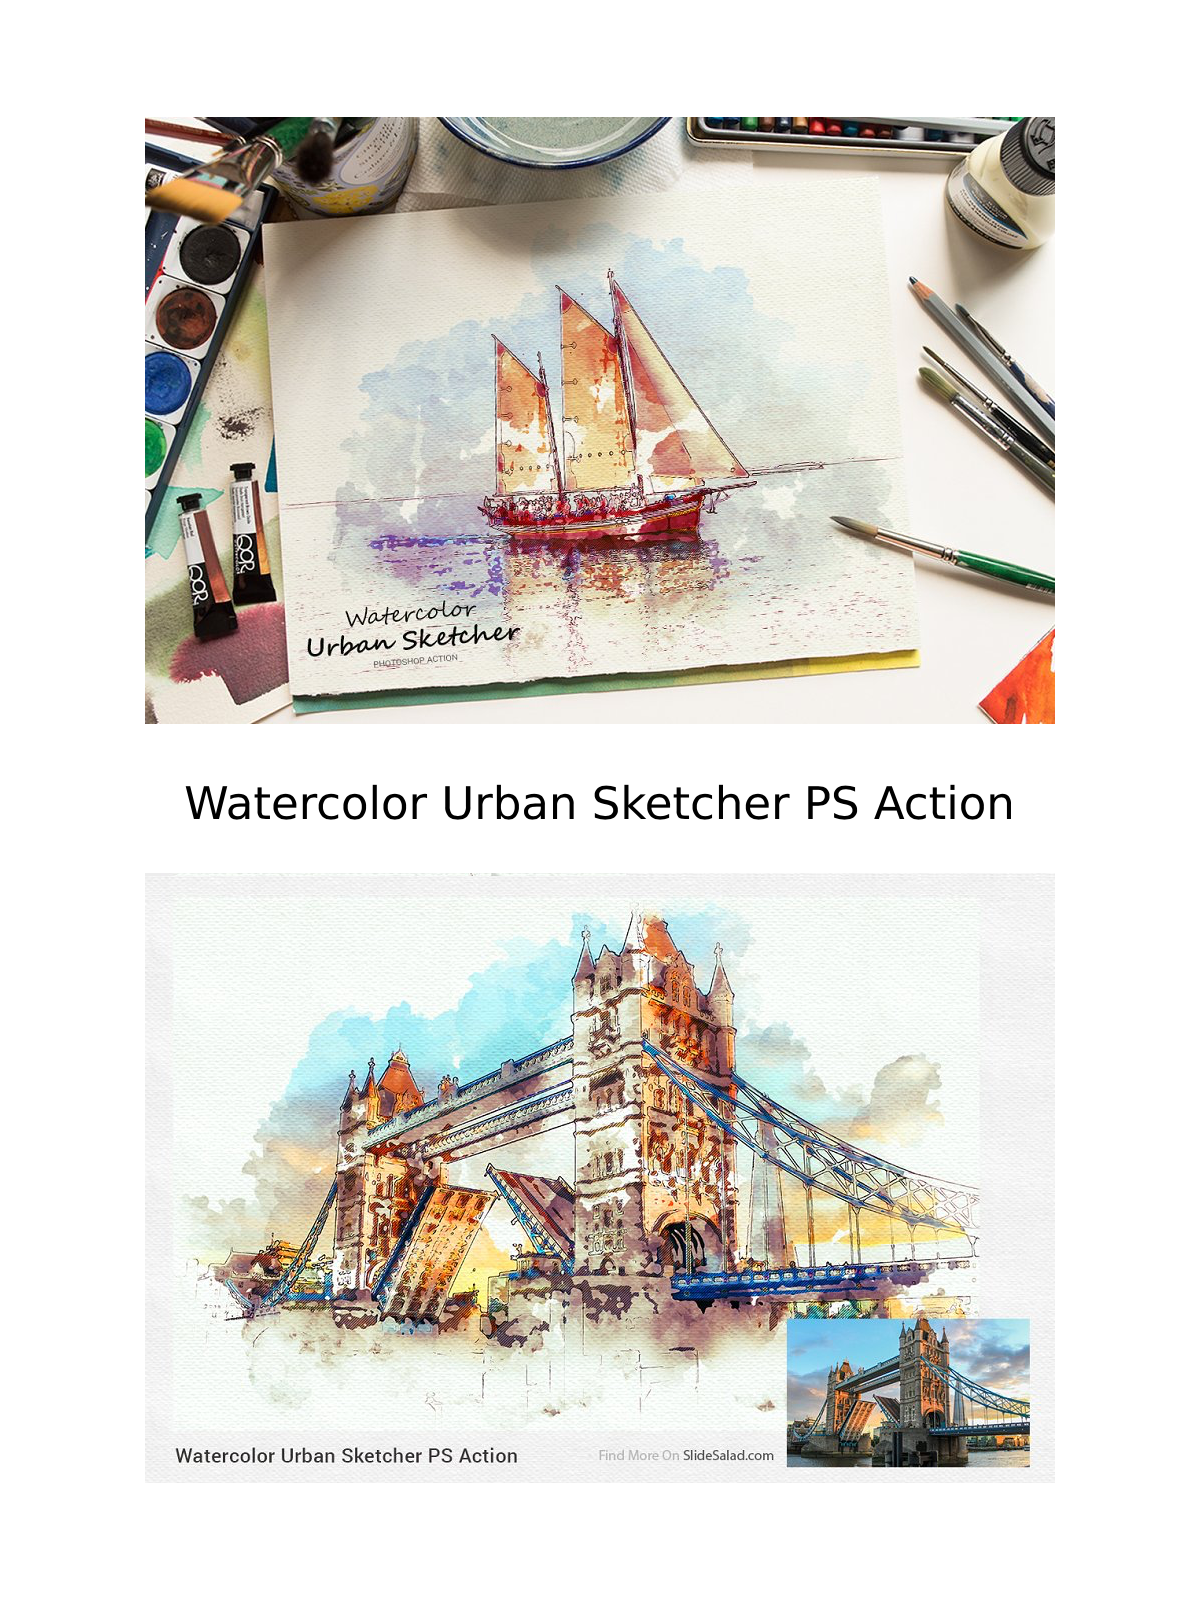 Watercolor urban sketcher ps action pinterest image preview.